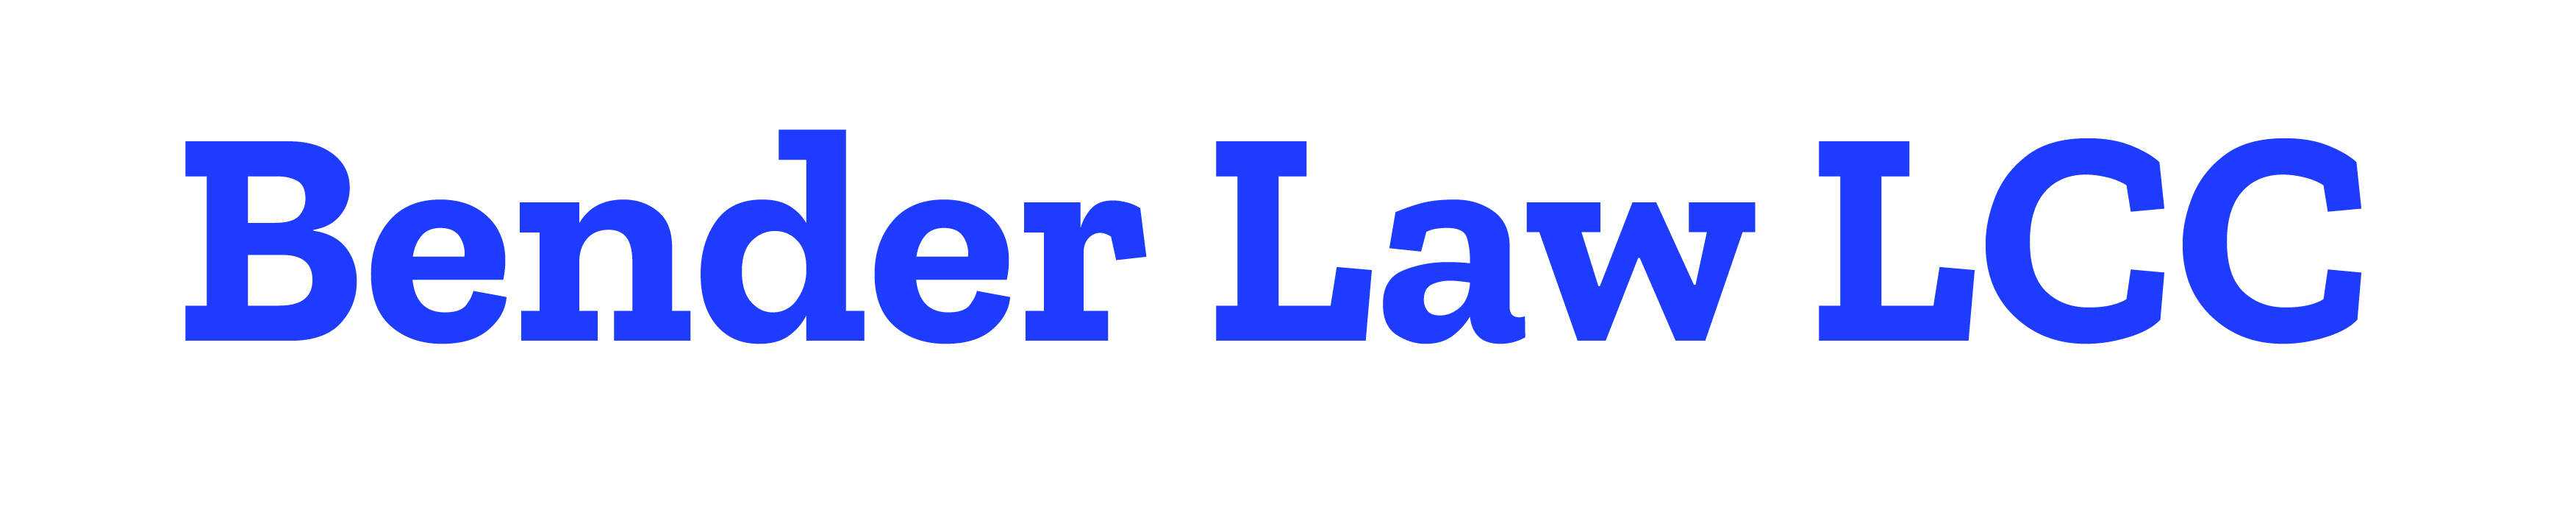 Bender Law LCC